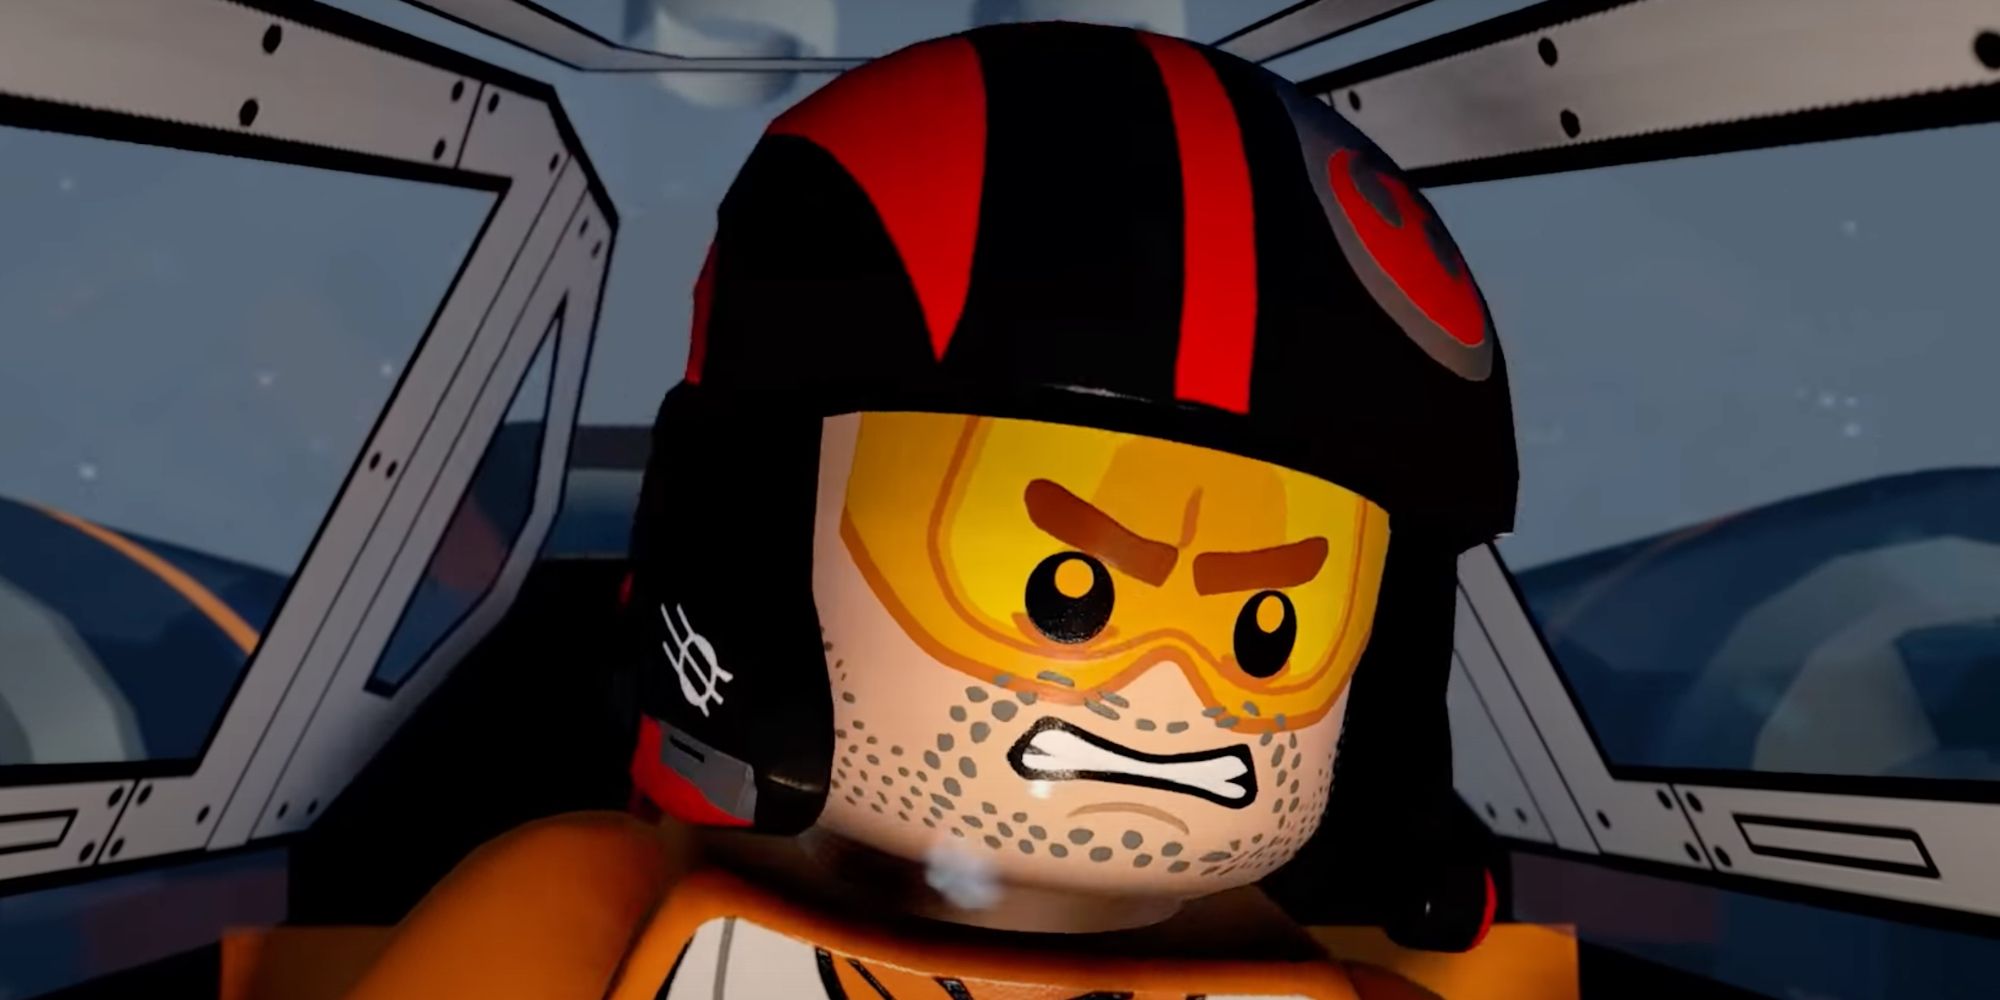 LEGO Skywalker Saga should bring back character customization and more in future DLC